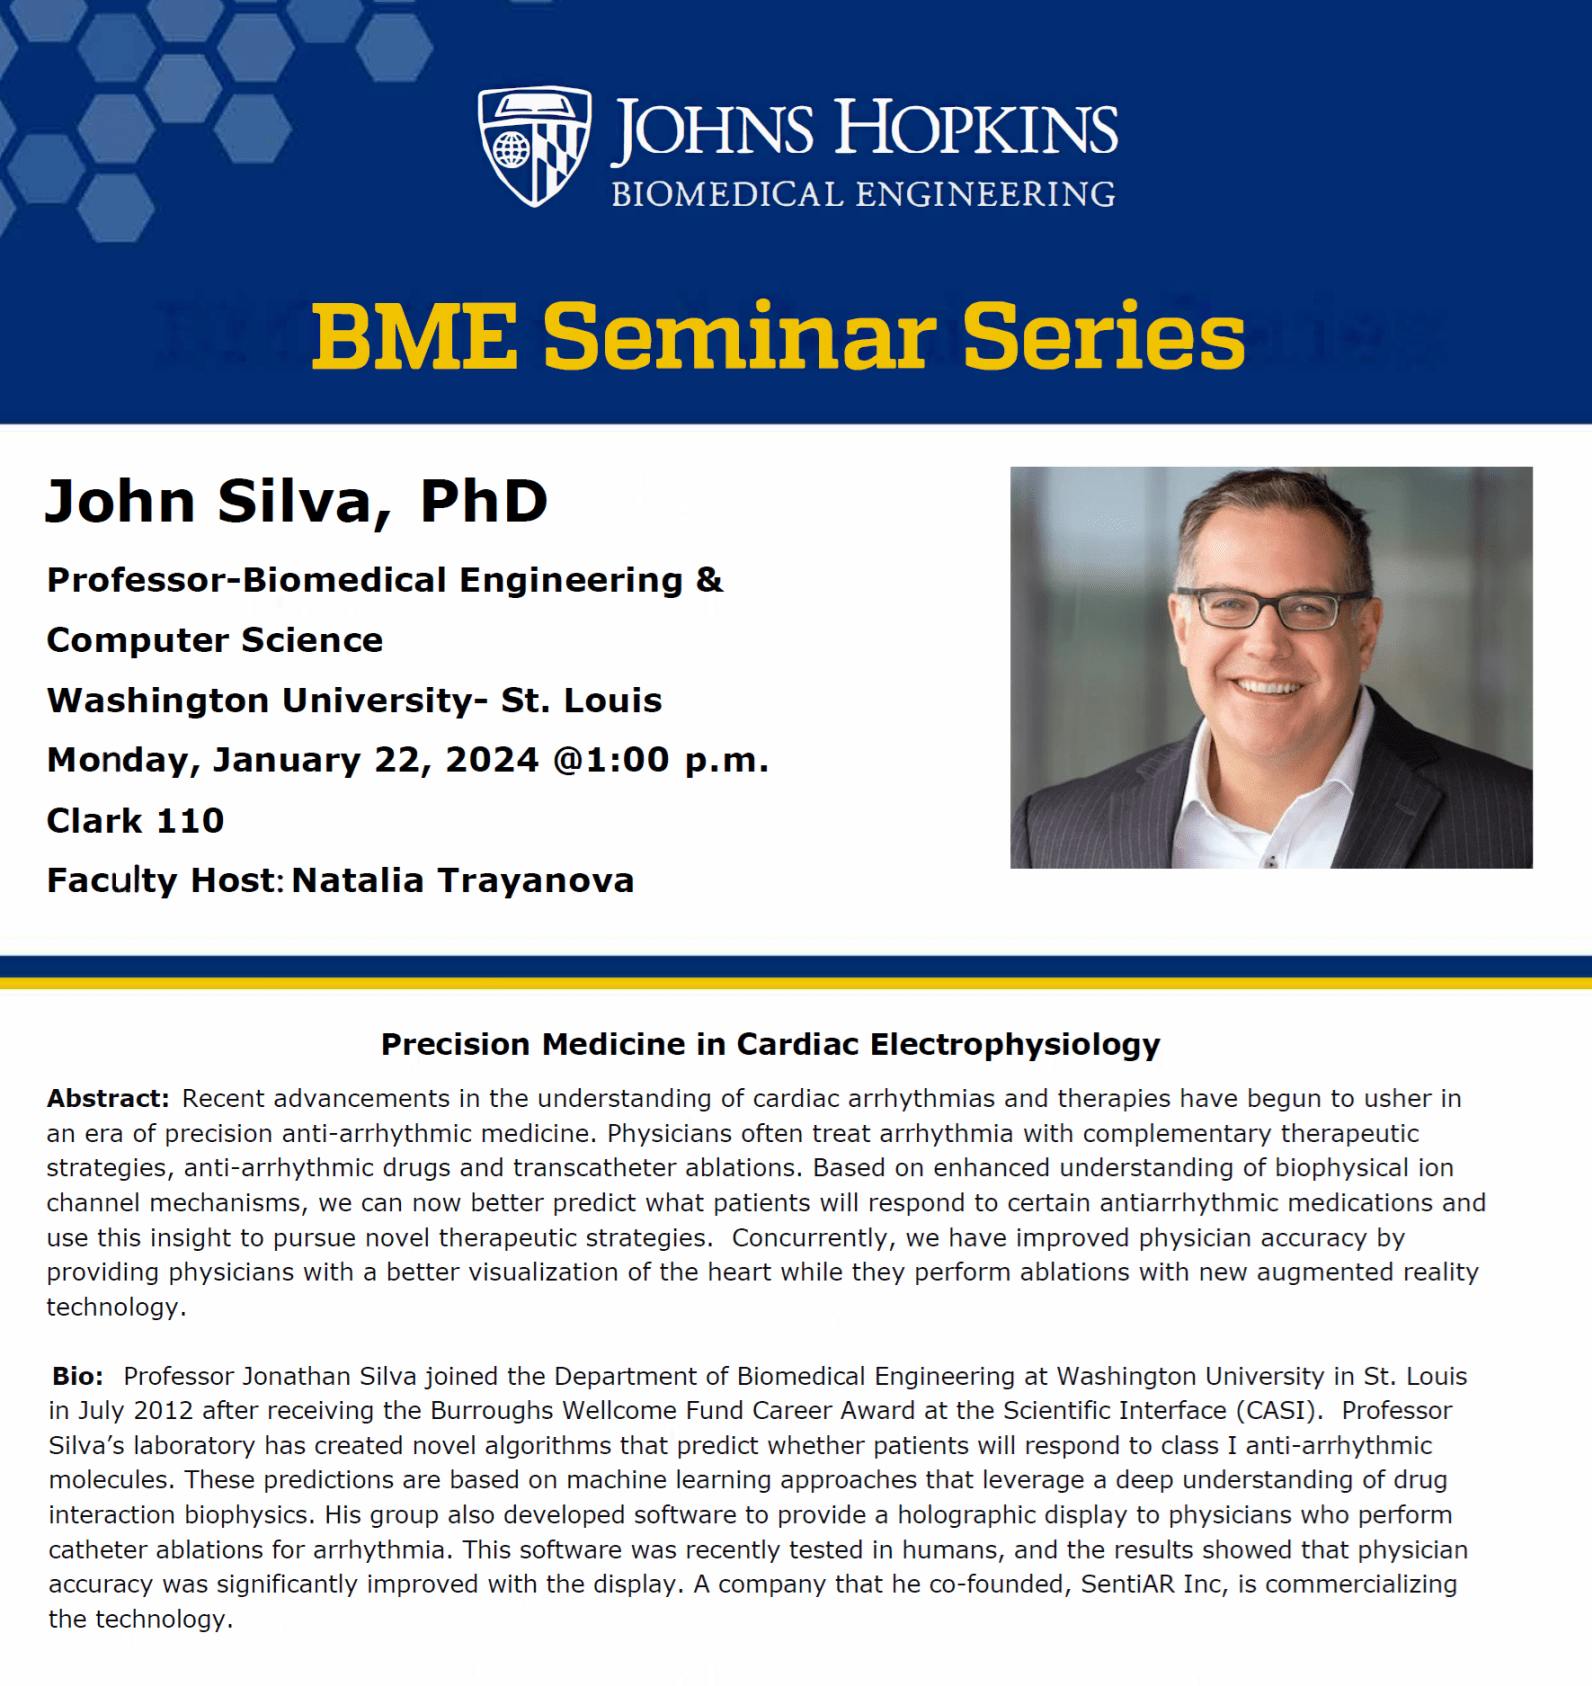 BME Seminar - John Silva - Johns Hopkins Biomedical Engineering